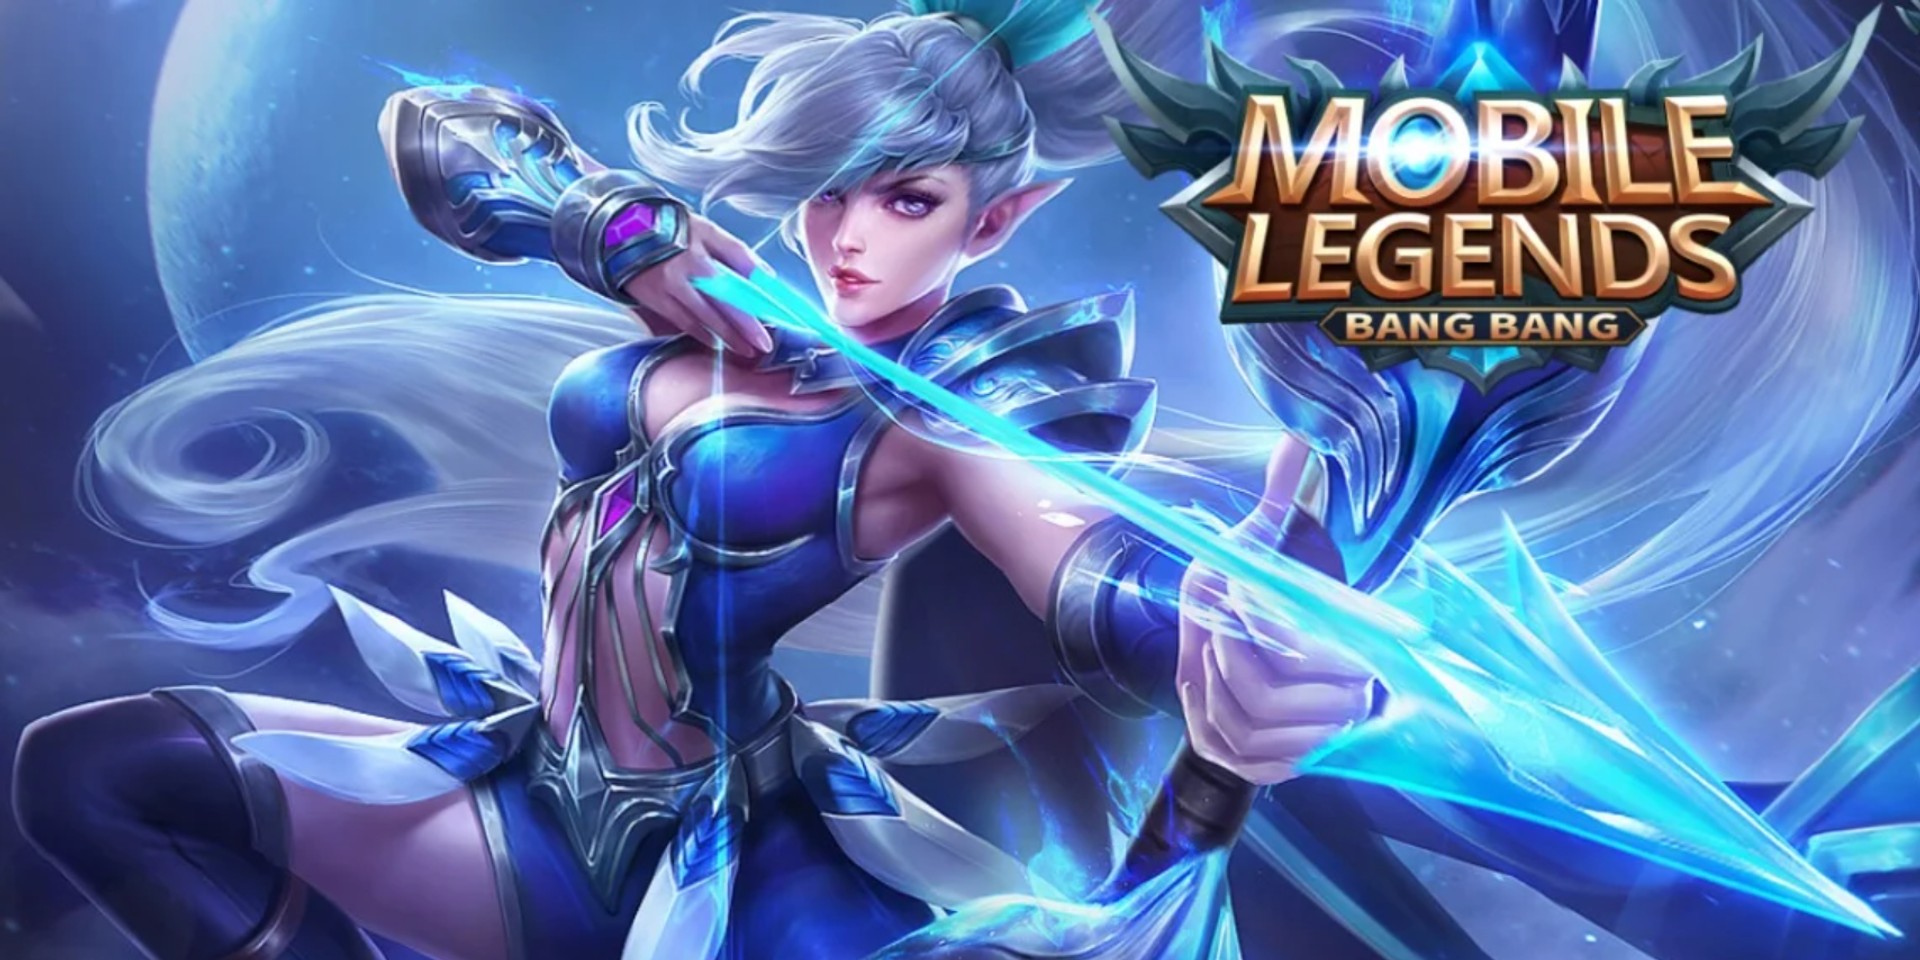 The 31st SEA Games Mobile Legends: Bang Bang tournament kicks off this week